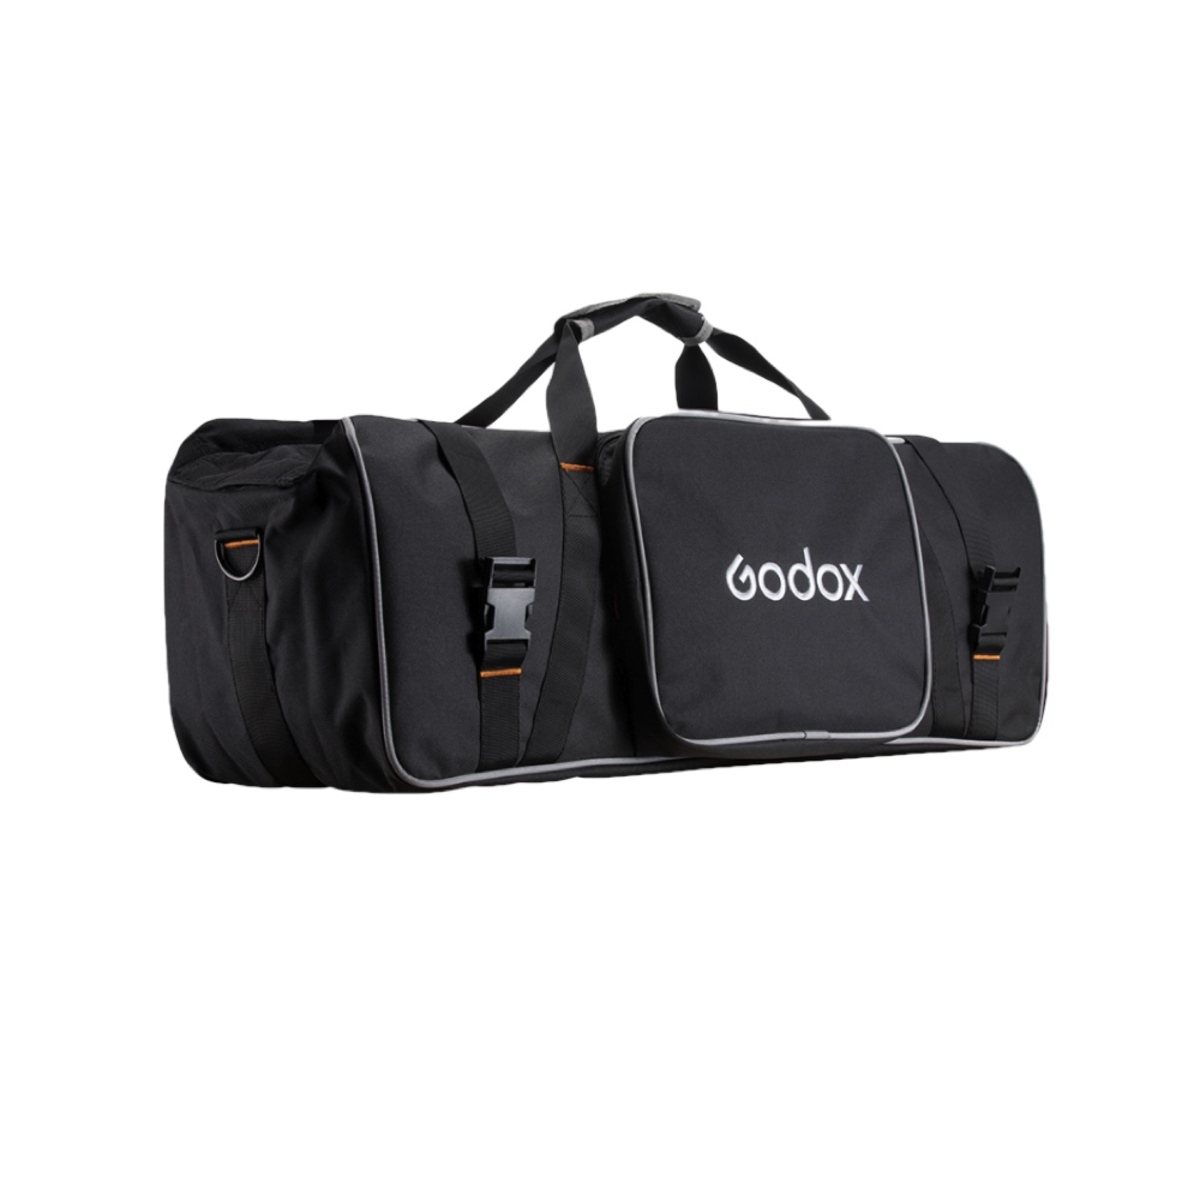 Godox CB-05 Carry Bag (Hard Material)